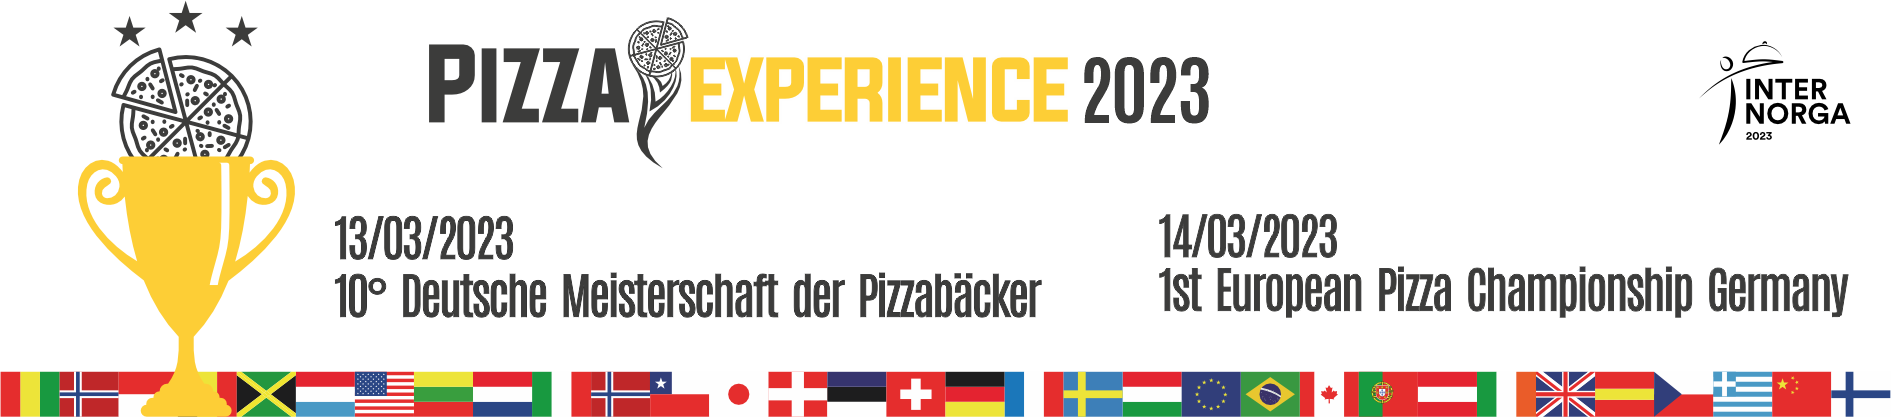 European Pizza Championship Germany 2023